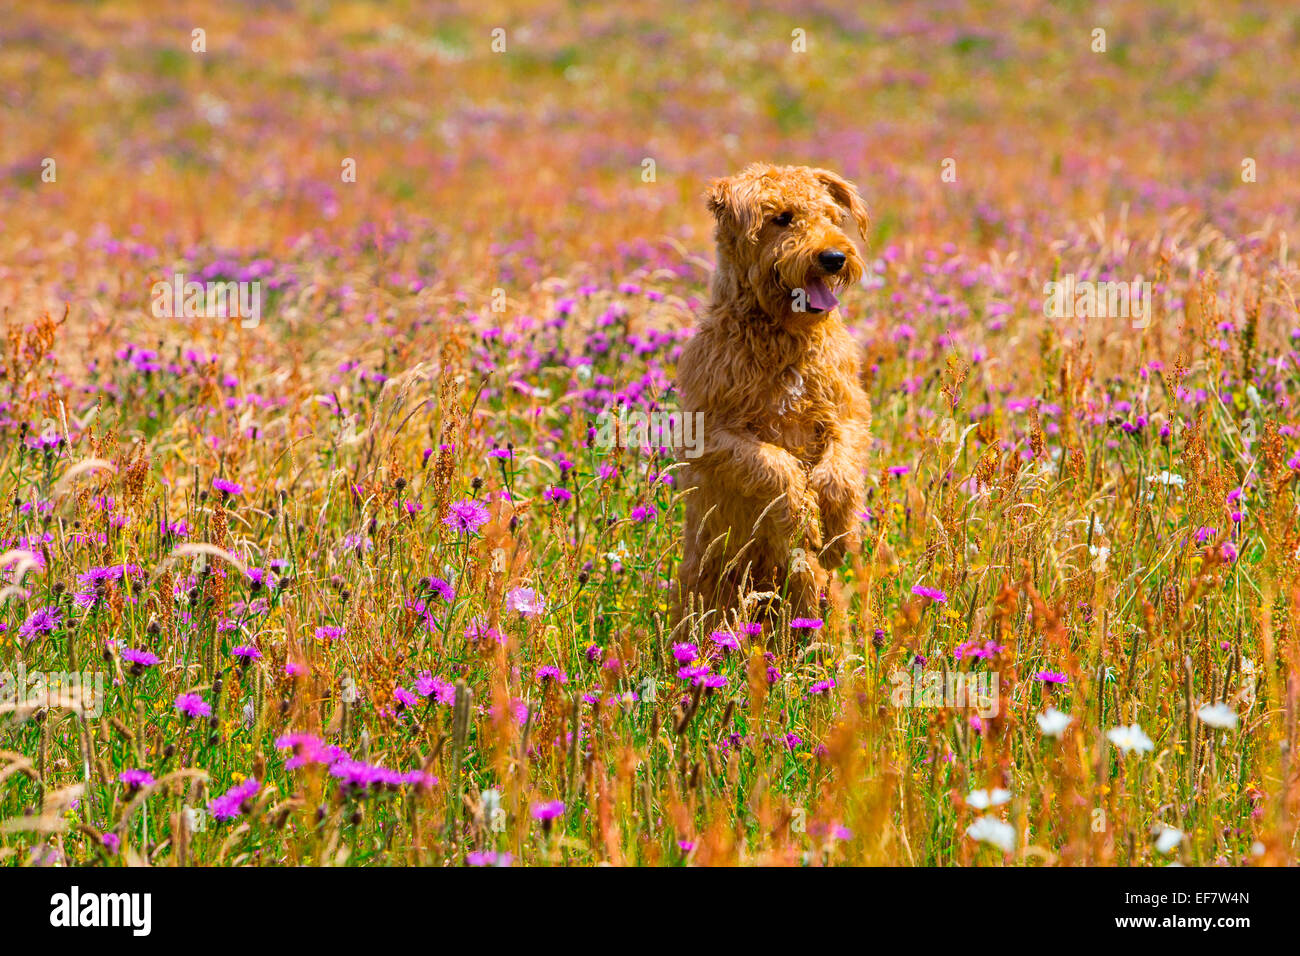 Terrier dog standing on hind legs in wildflower meadow Stock Photo